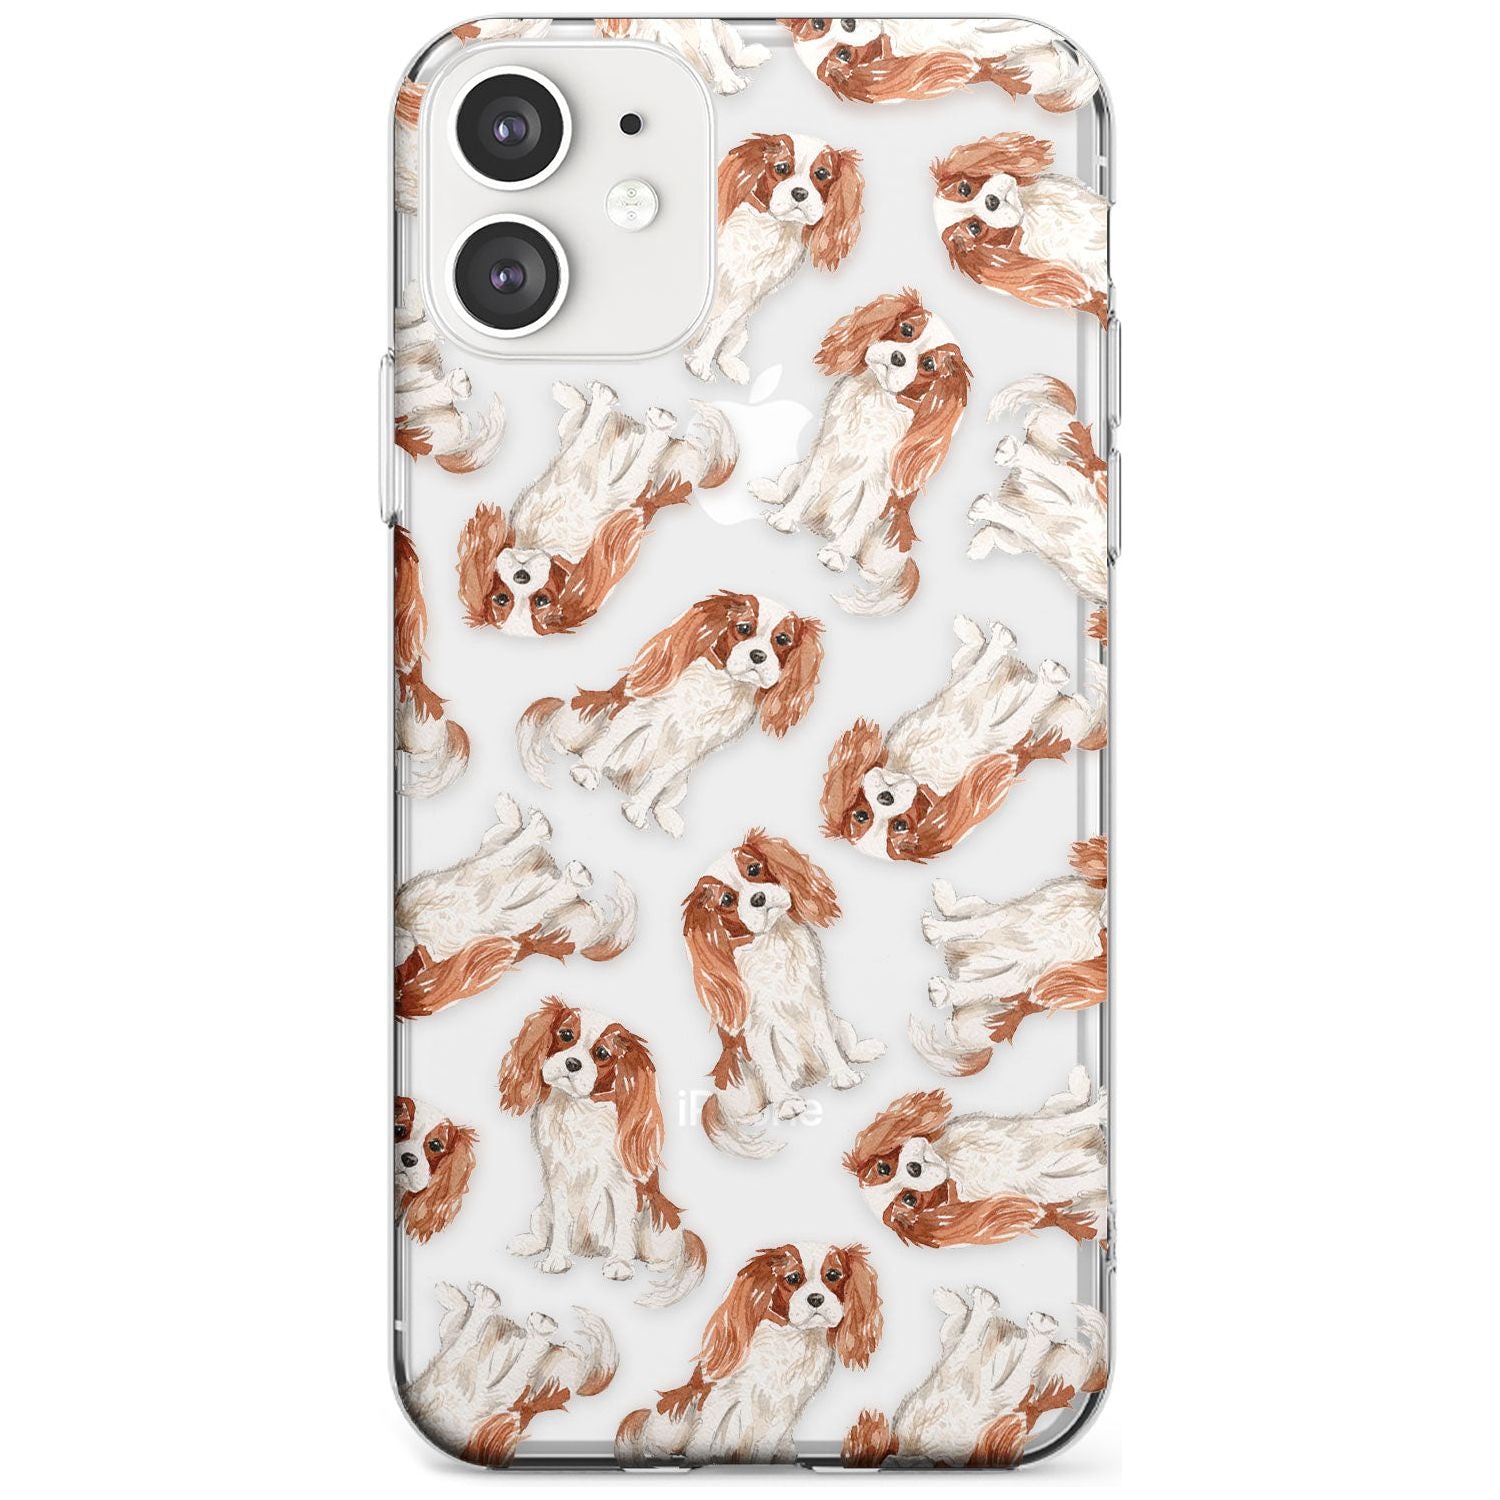 Cavalier King Charles Spaniel Dog Pattern Slim TPU Phone Case for iPhone 11